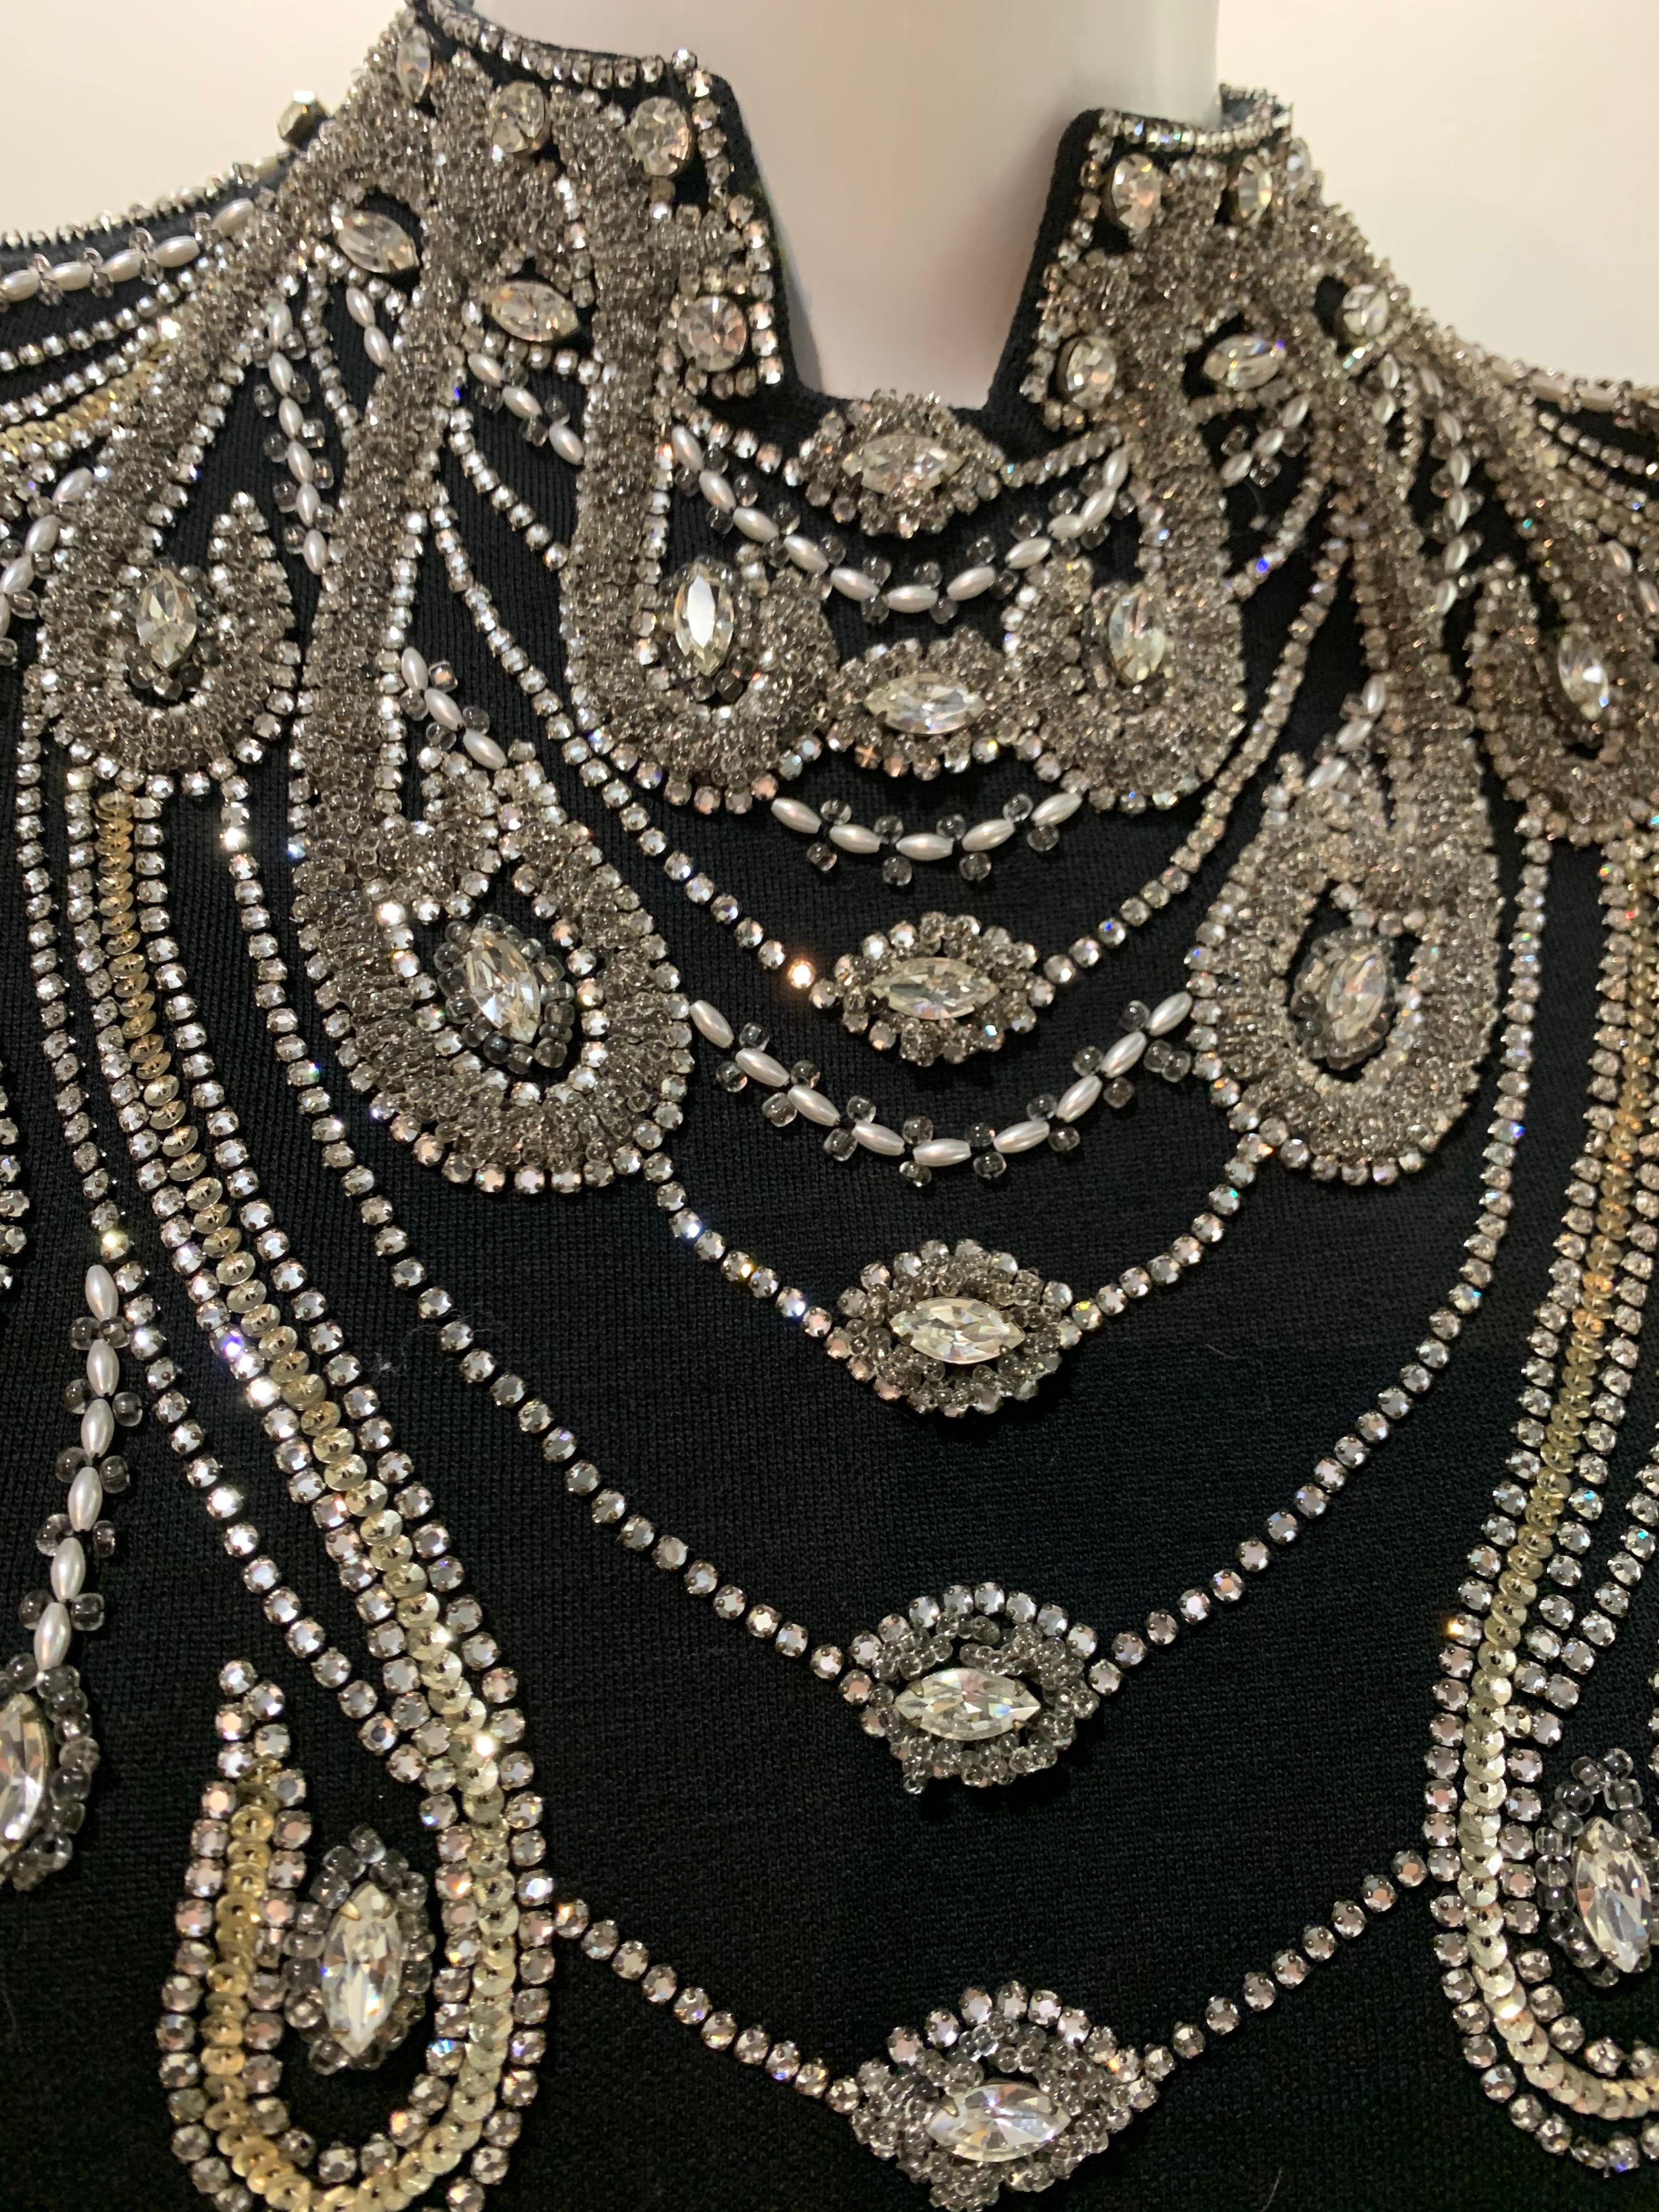 1960 Spectacular Mr. Blackwell Custom Rhinestone Jeweled Black Cocktail Dress For Sale 9